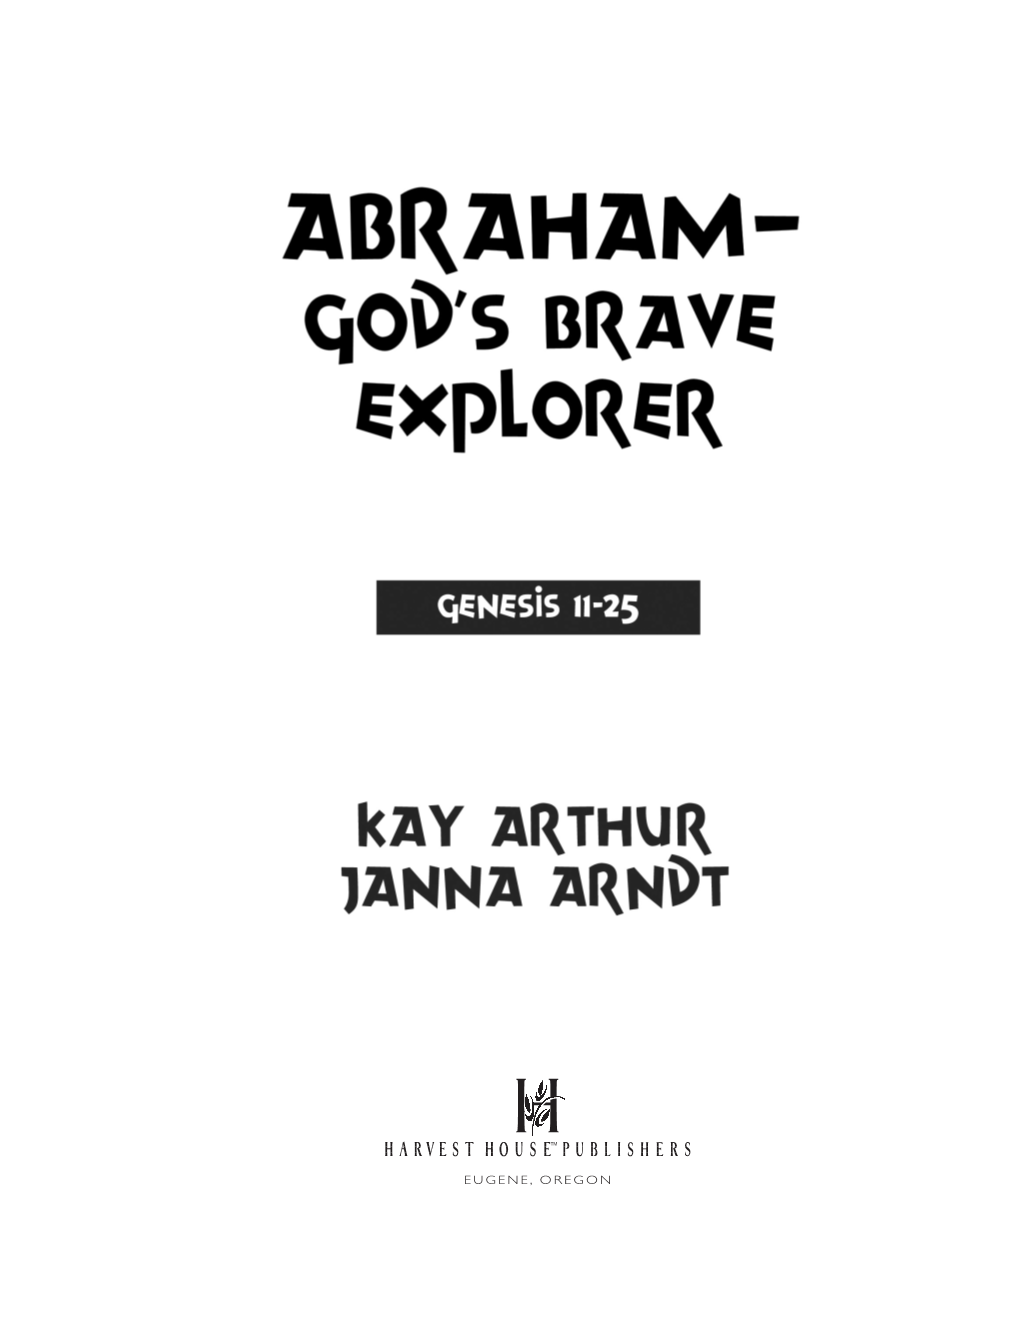 Abraham-God's Brave Explorer 1/13/03 10:19 AM Page 1 Abraham-God's Brave Explorer 1/13/03 2:13 PM Page 2